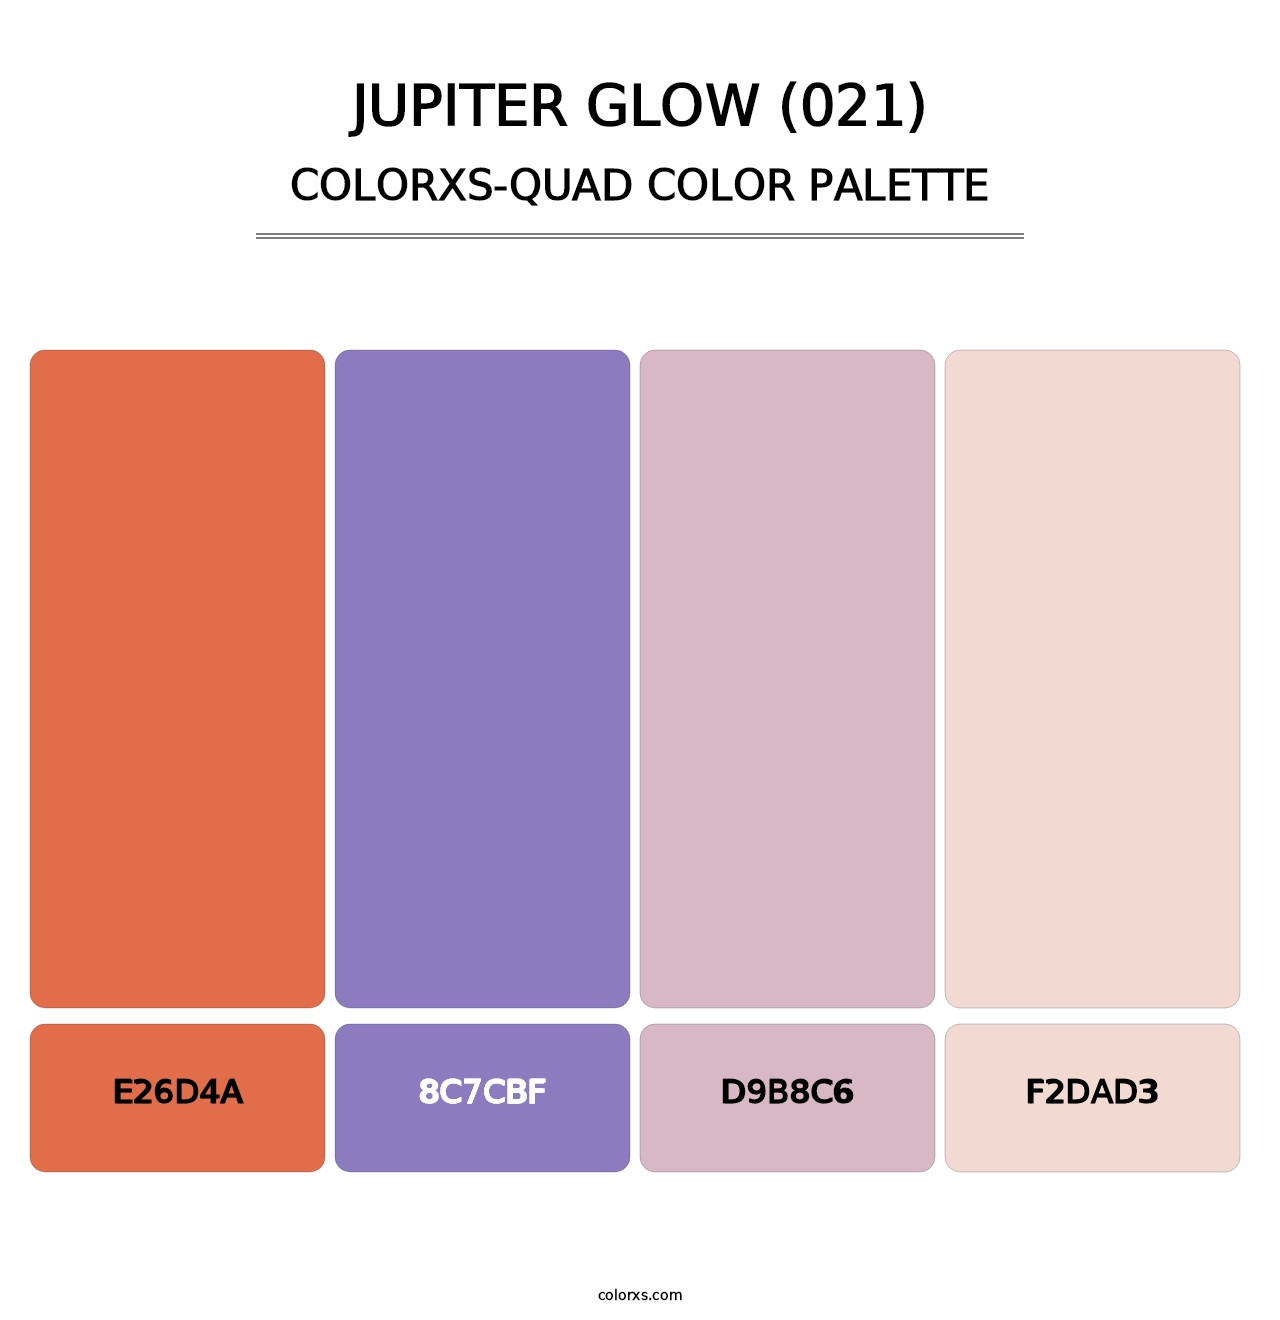 Jupiter Glow (021) - Colorxs Quad Palette